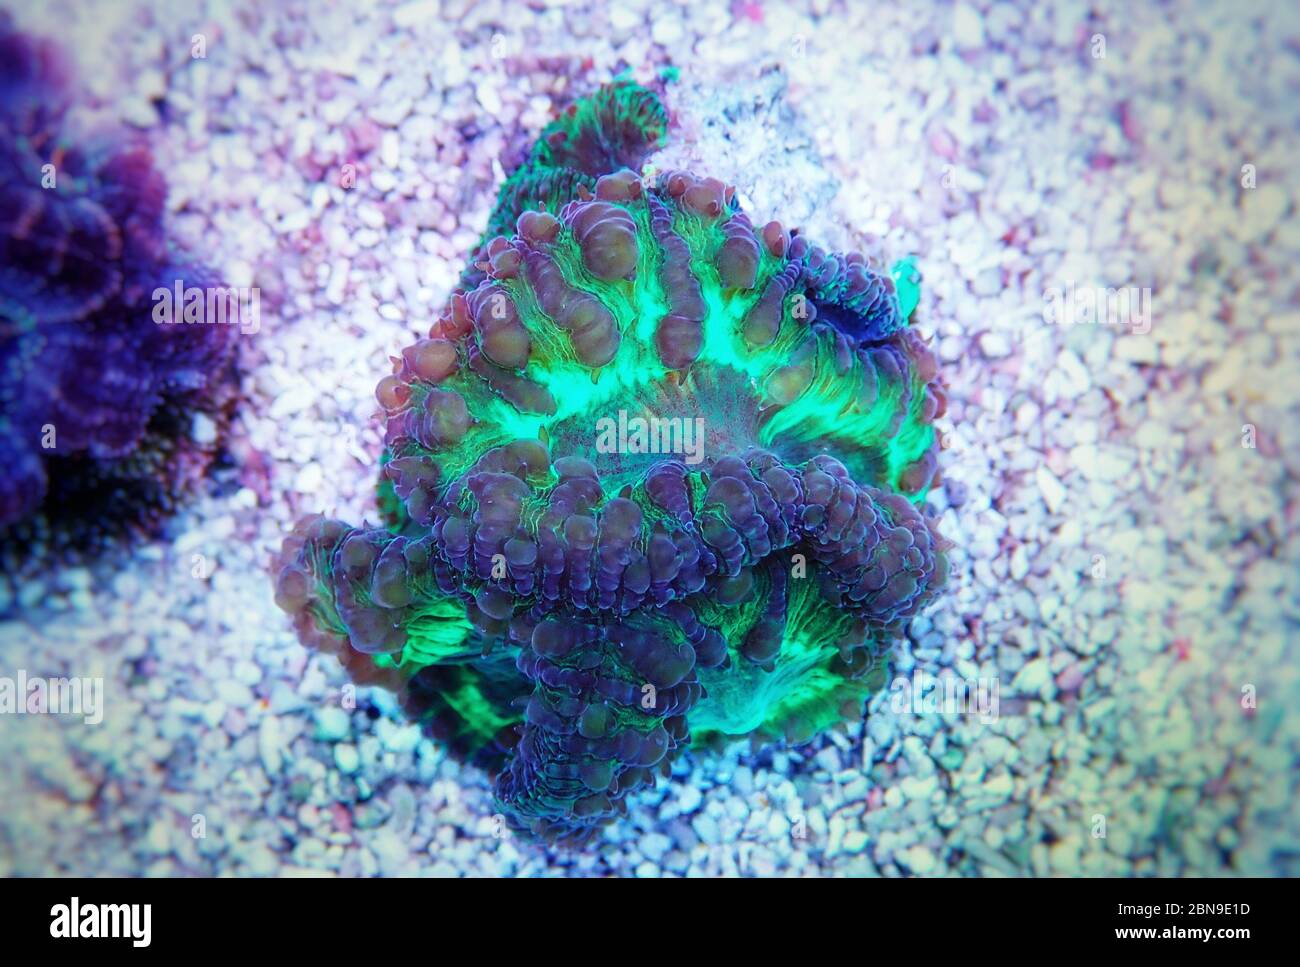 Blastomussa wellsi - Big Polyp Blastomussa LPS Coral Stock Photo